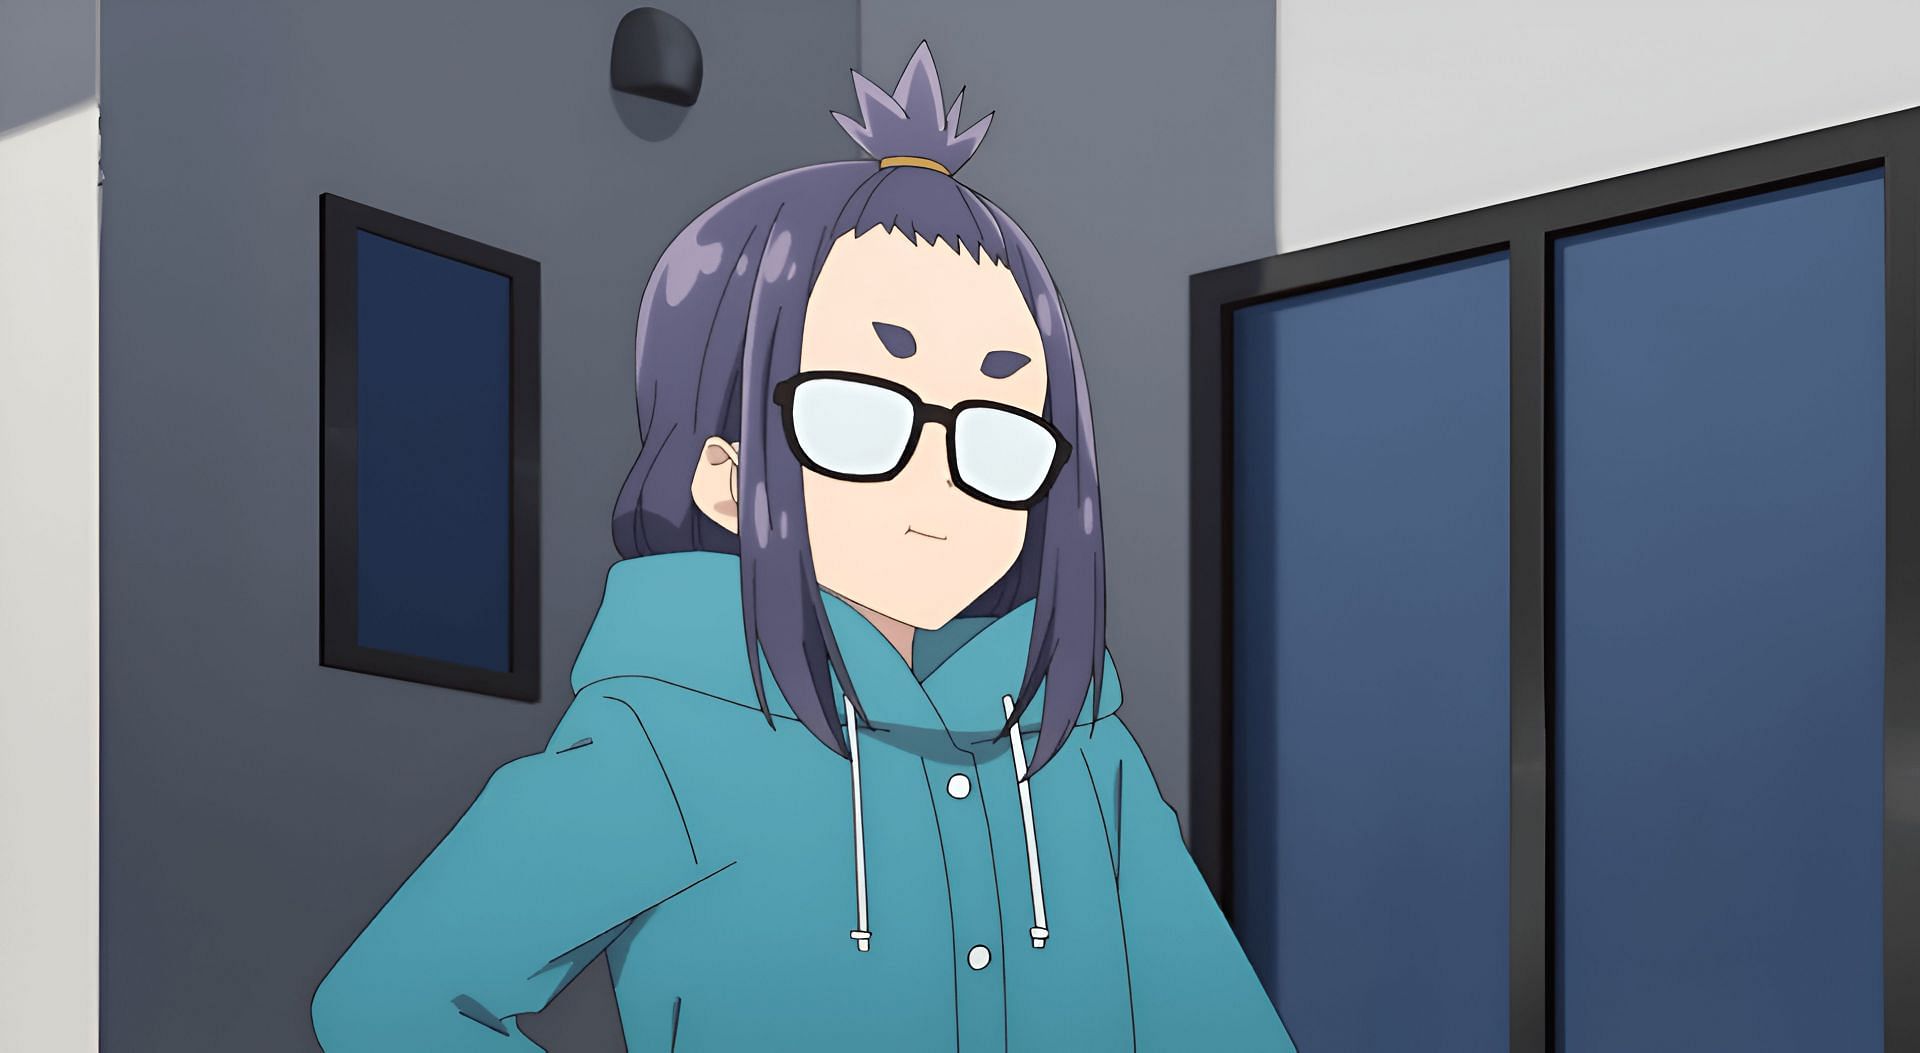 Chiaki as seen in episode 2 (Image via Studio 8bit)